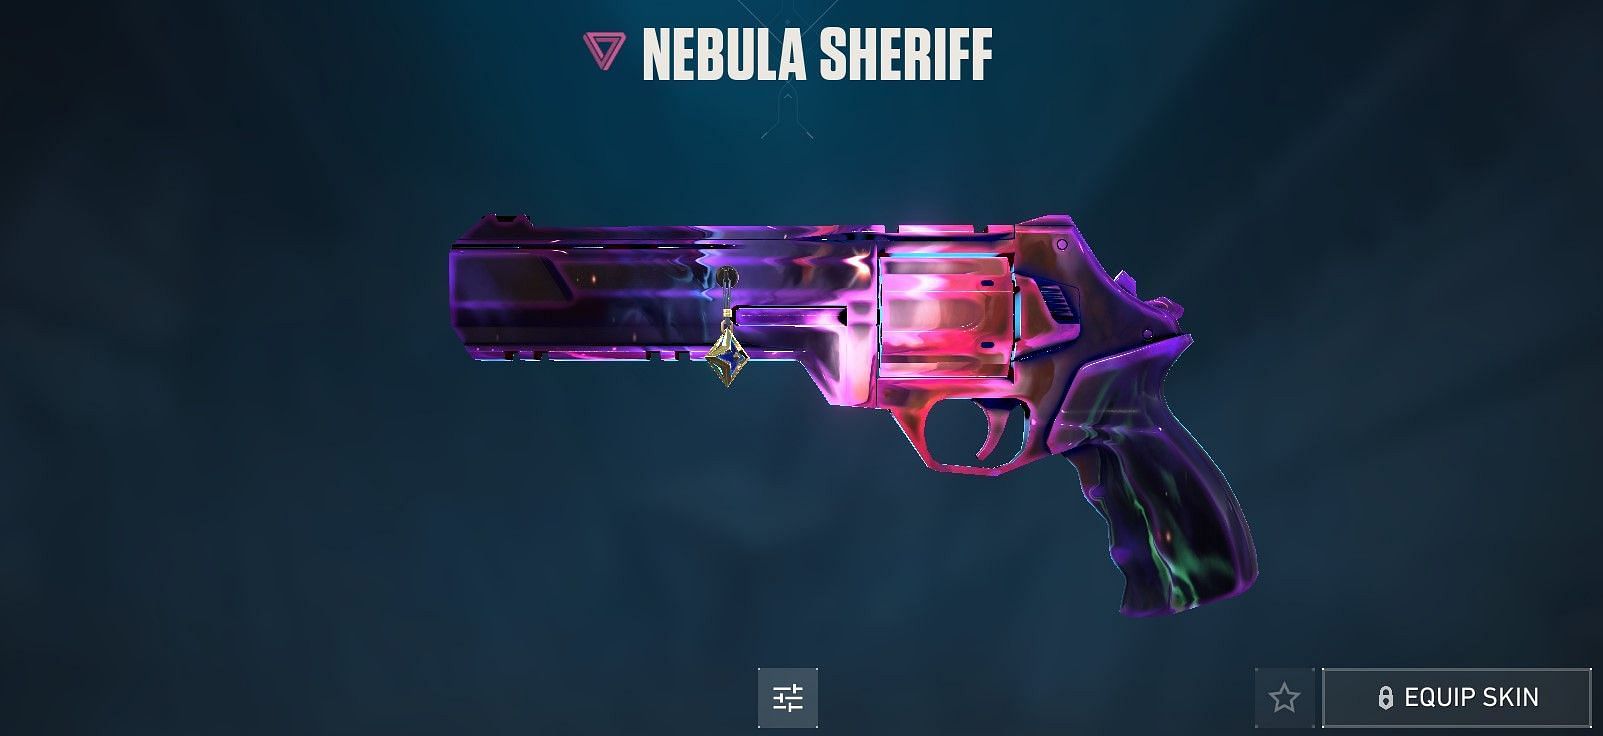 Nebula Sheriff (Image via Riot Games)